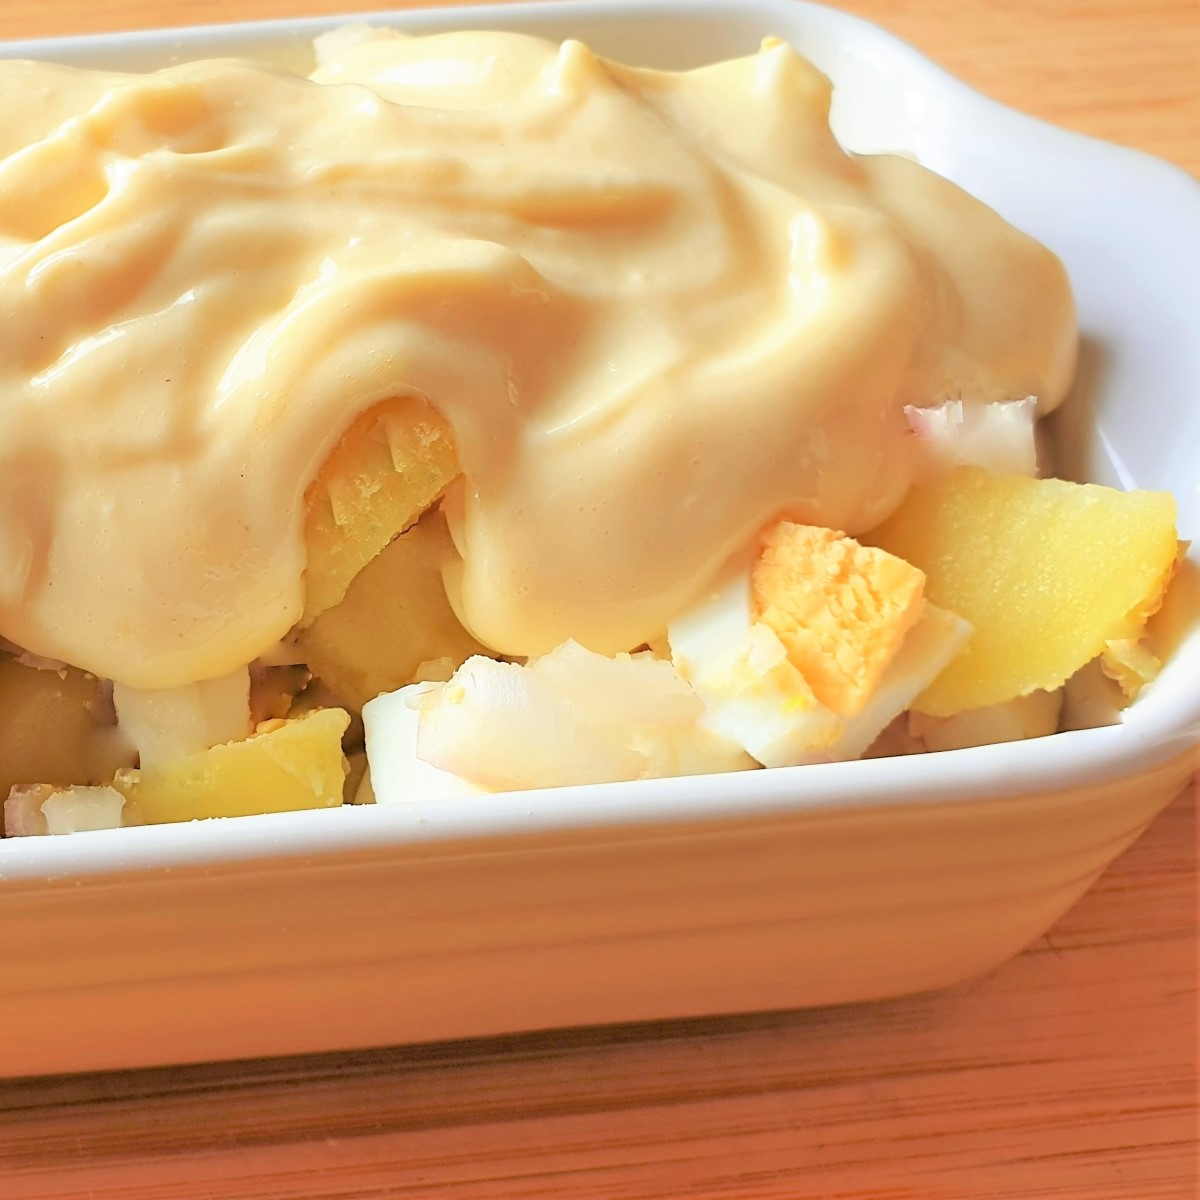 Homemade mayonnaise on a bowl of potato salad.